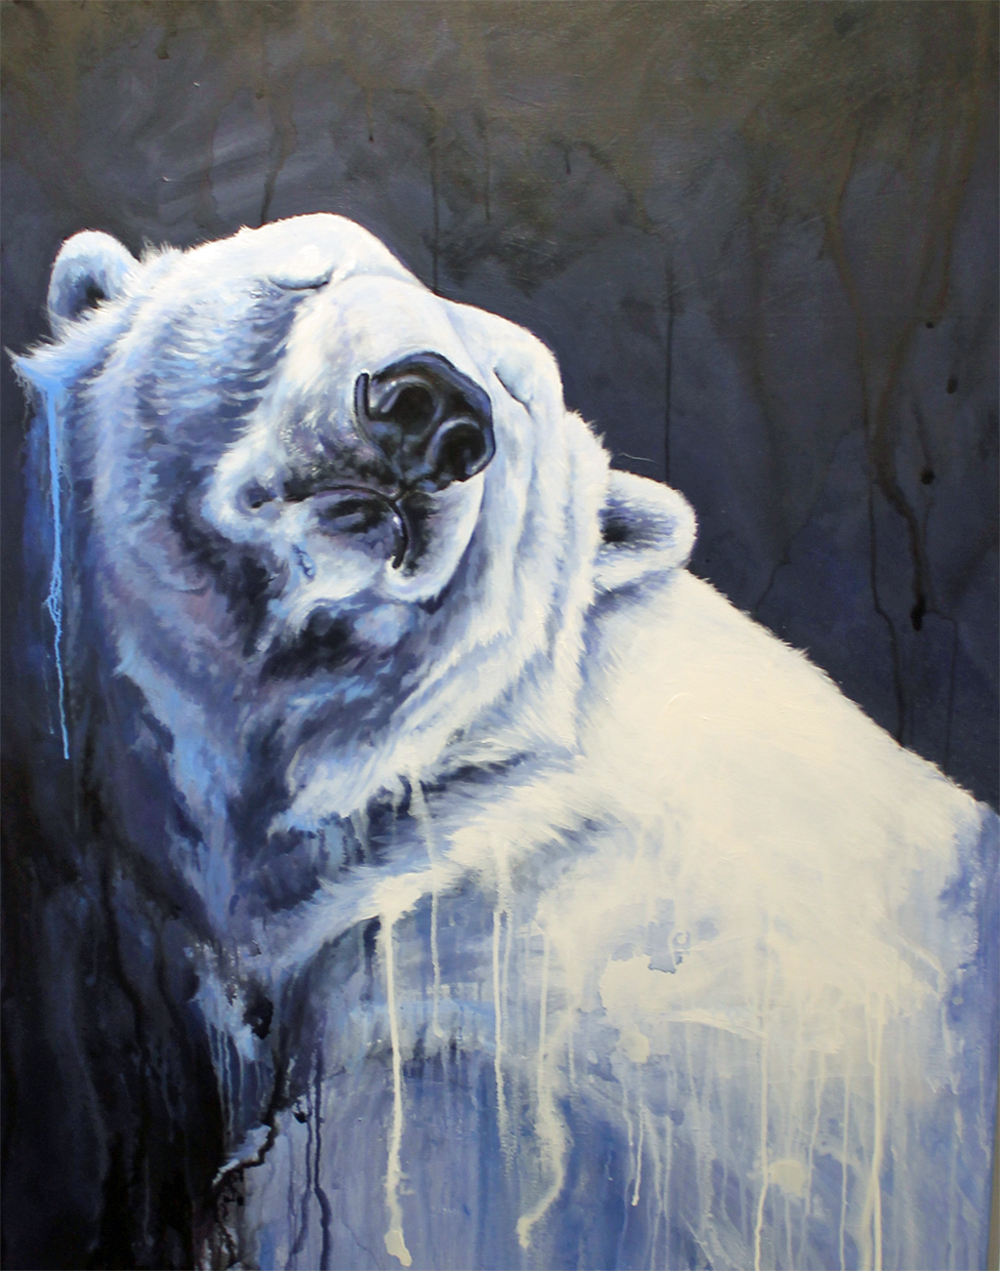 Greta the polar bear. Original painting by Winnipeg artist Kal Barteski.